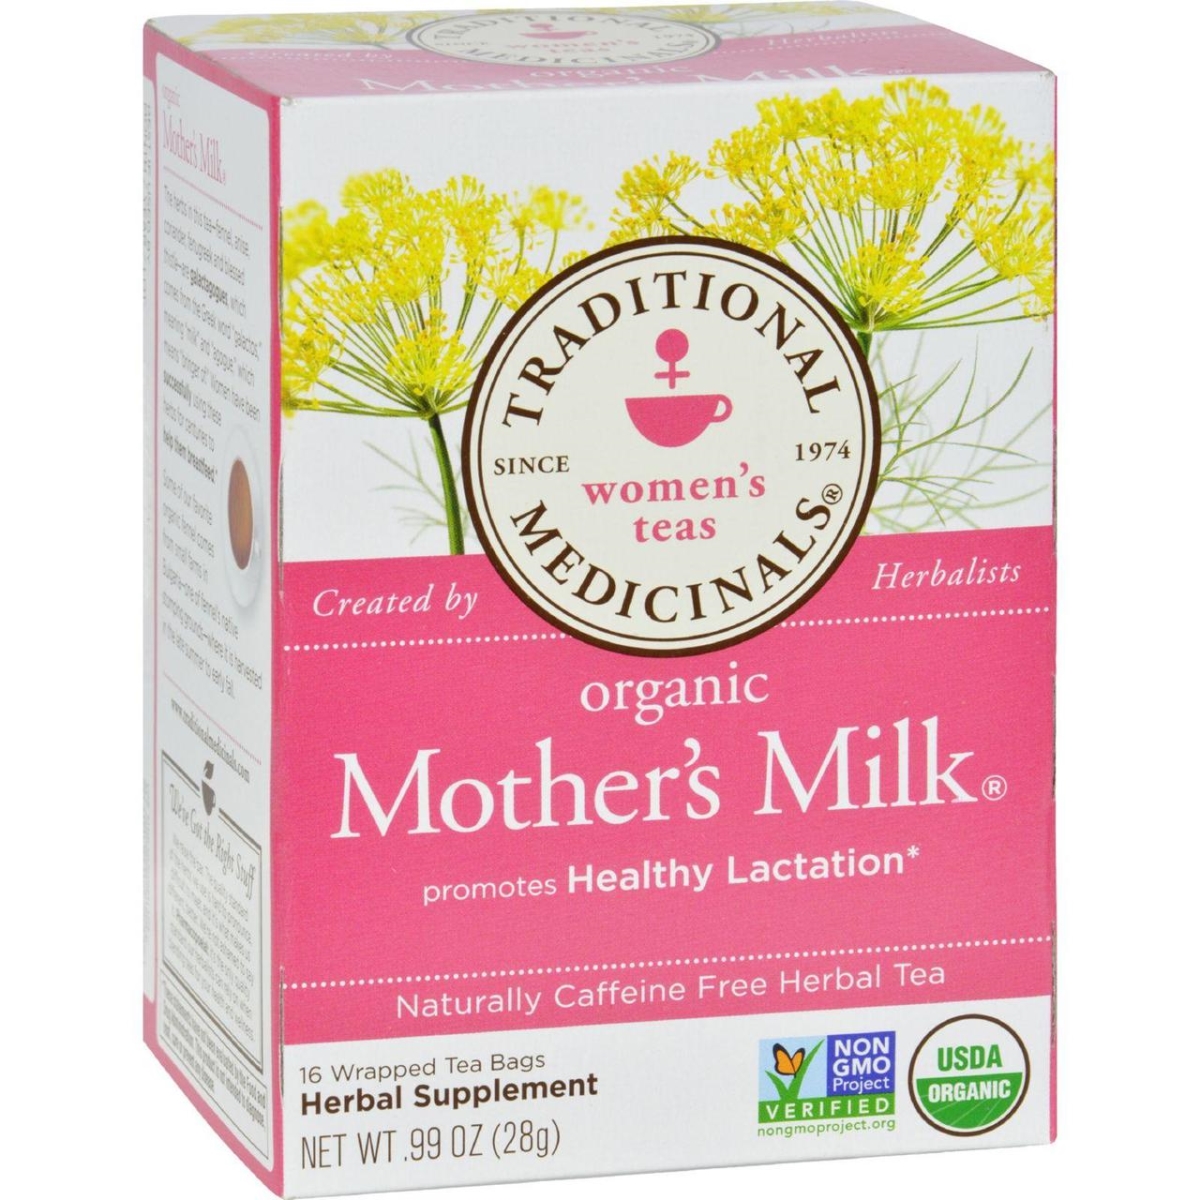 Hg0650705 Organic Mothers Milk Herbal Tea, 16 Tea Bags - Case Of 6